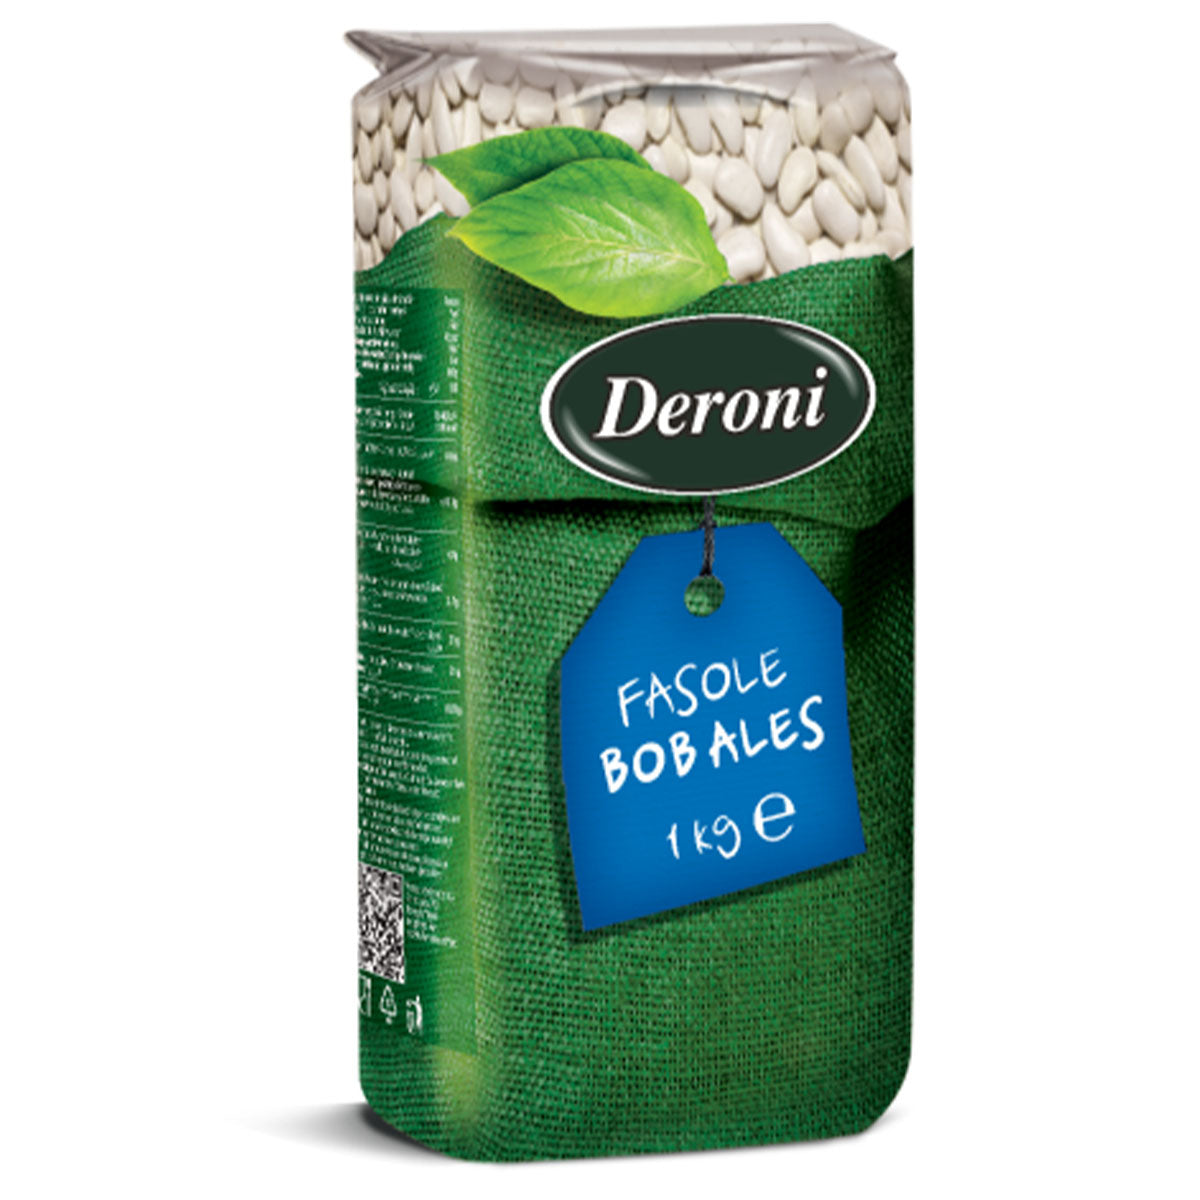 Deroni - White Beans Bob Ales - 1kg - Continental Food Store